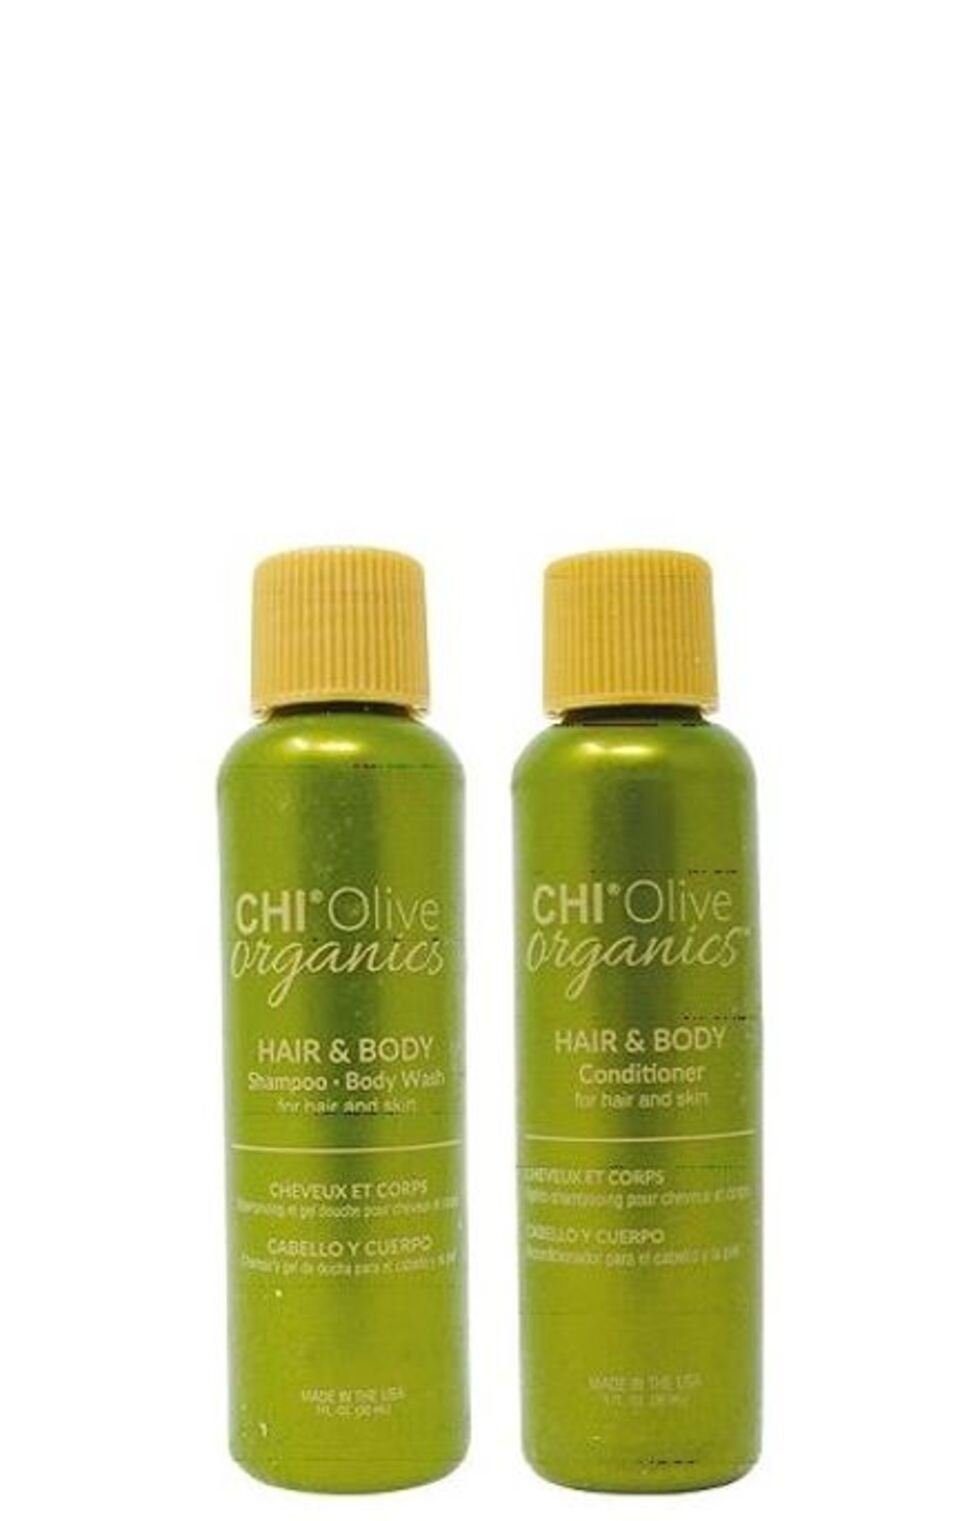 CHI Haarpflege-Set CHI Olive 30 30 2-tlg. Reiseset, Shampoo Conditioner ml, Reiseset ml+ Organics